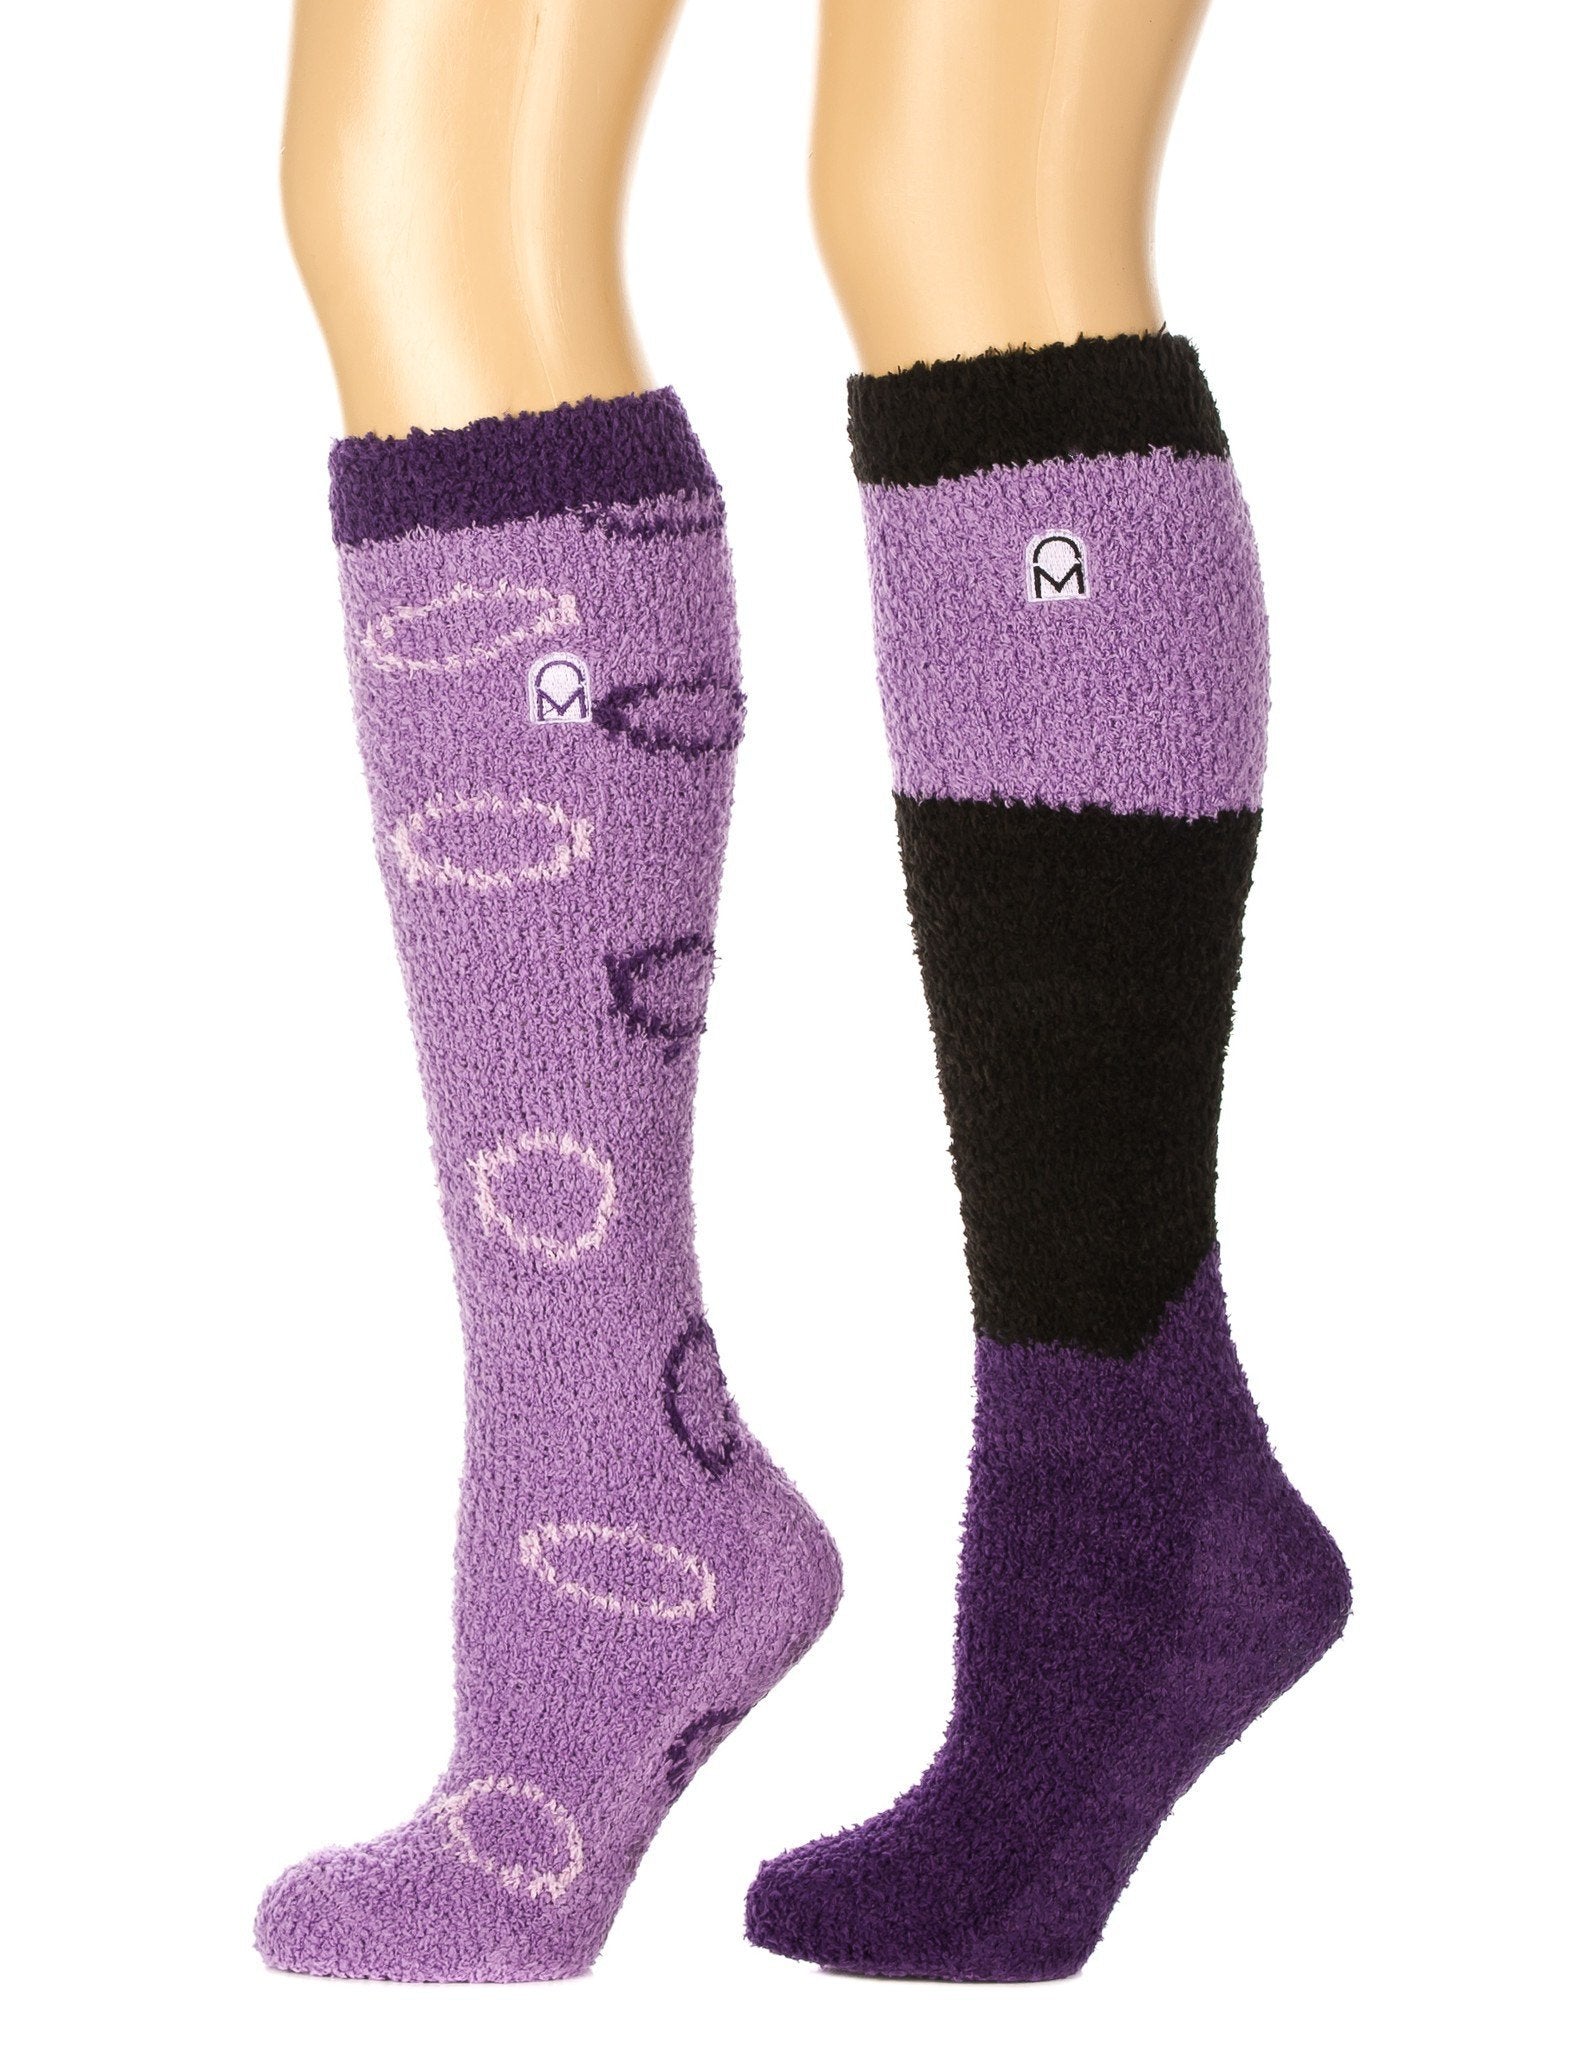 Women's (2 Pairs) Soft Anti-Skid Fuzzy Winter Knee High Socks - Set A5